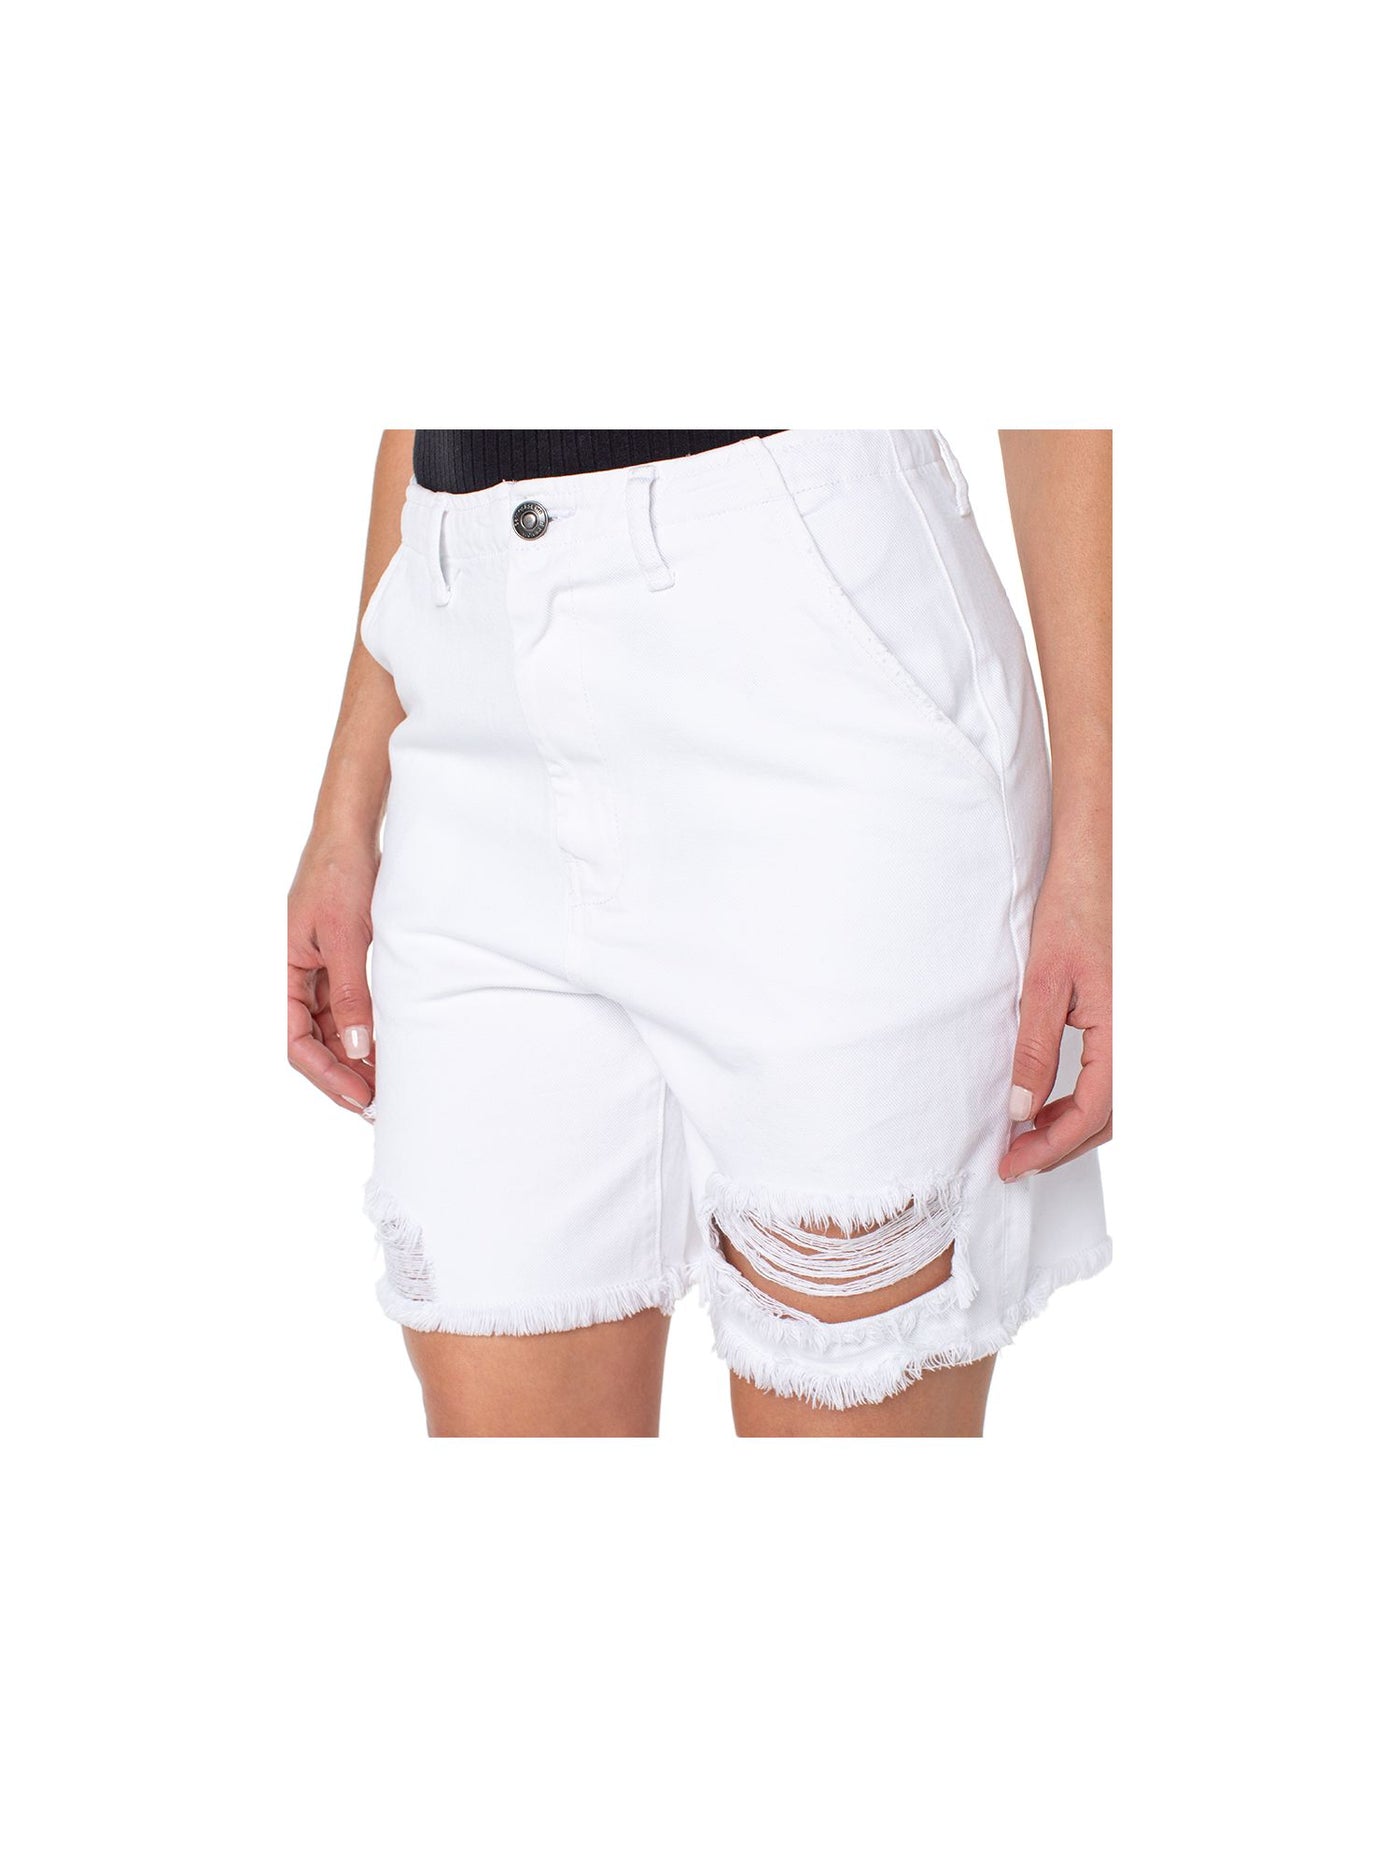 EARNEST SEWN NEW YORK Womens White Zippered Pocketed Frayed Hems High Waist Shorts Juniors 27